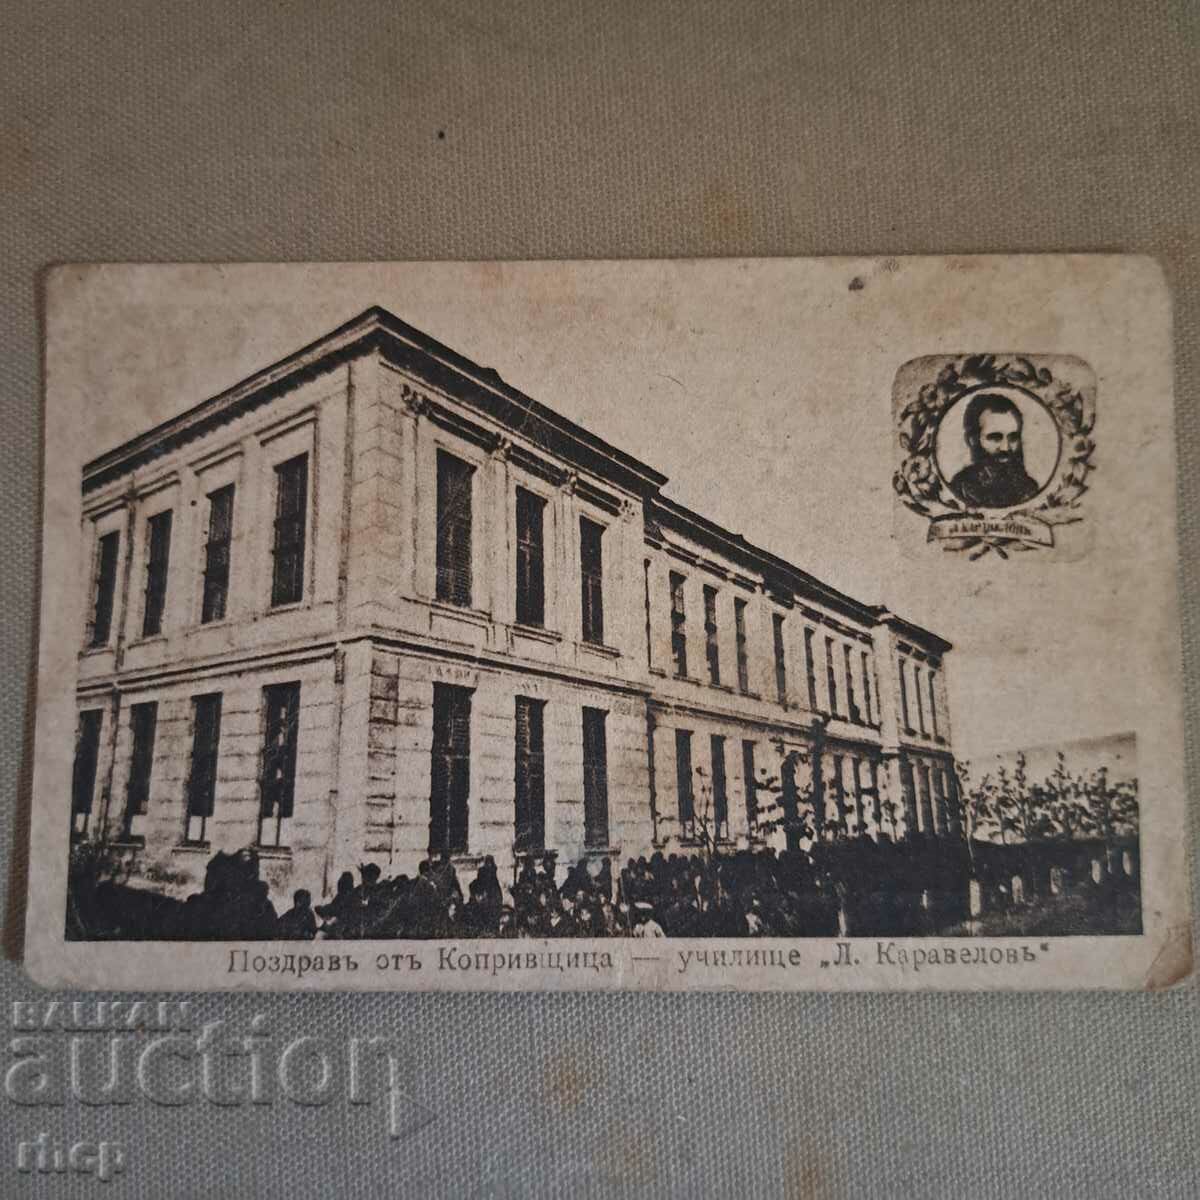 Școala Koprivshtitsa Karavelov carte poștală veche din anii 1930